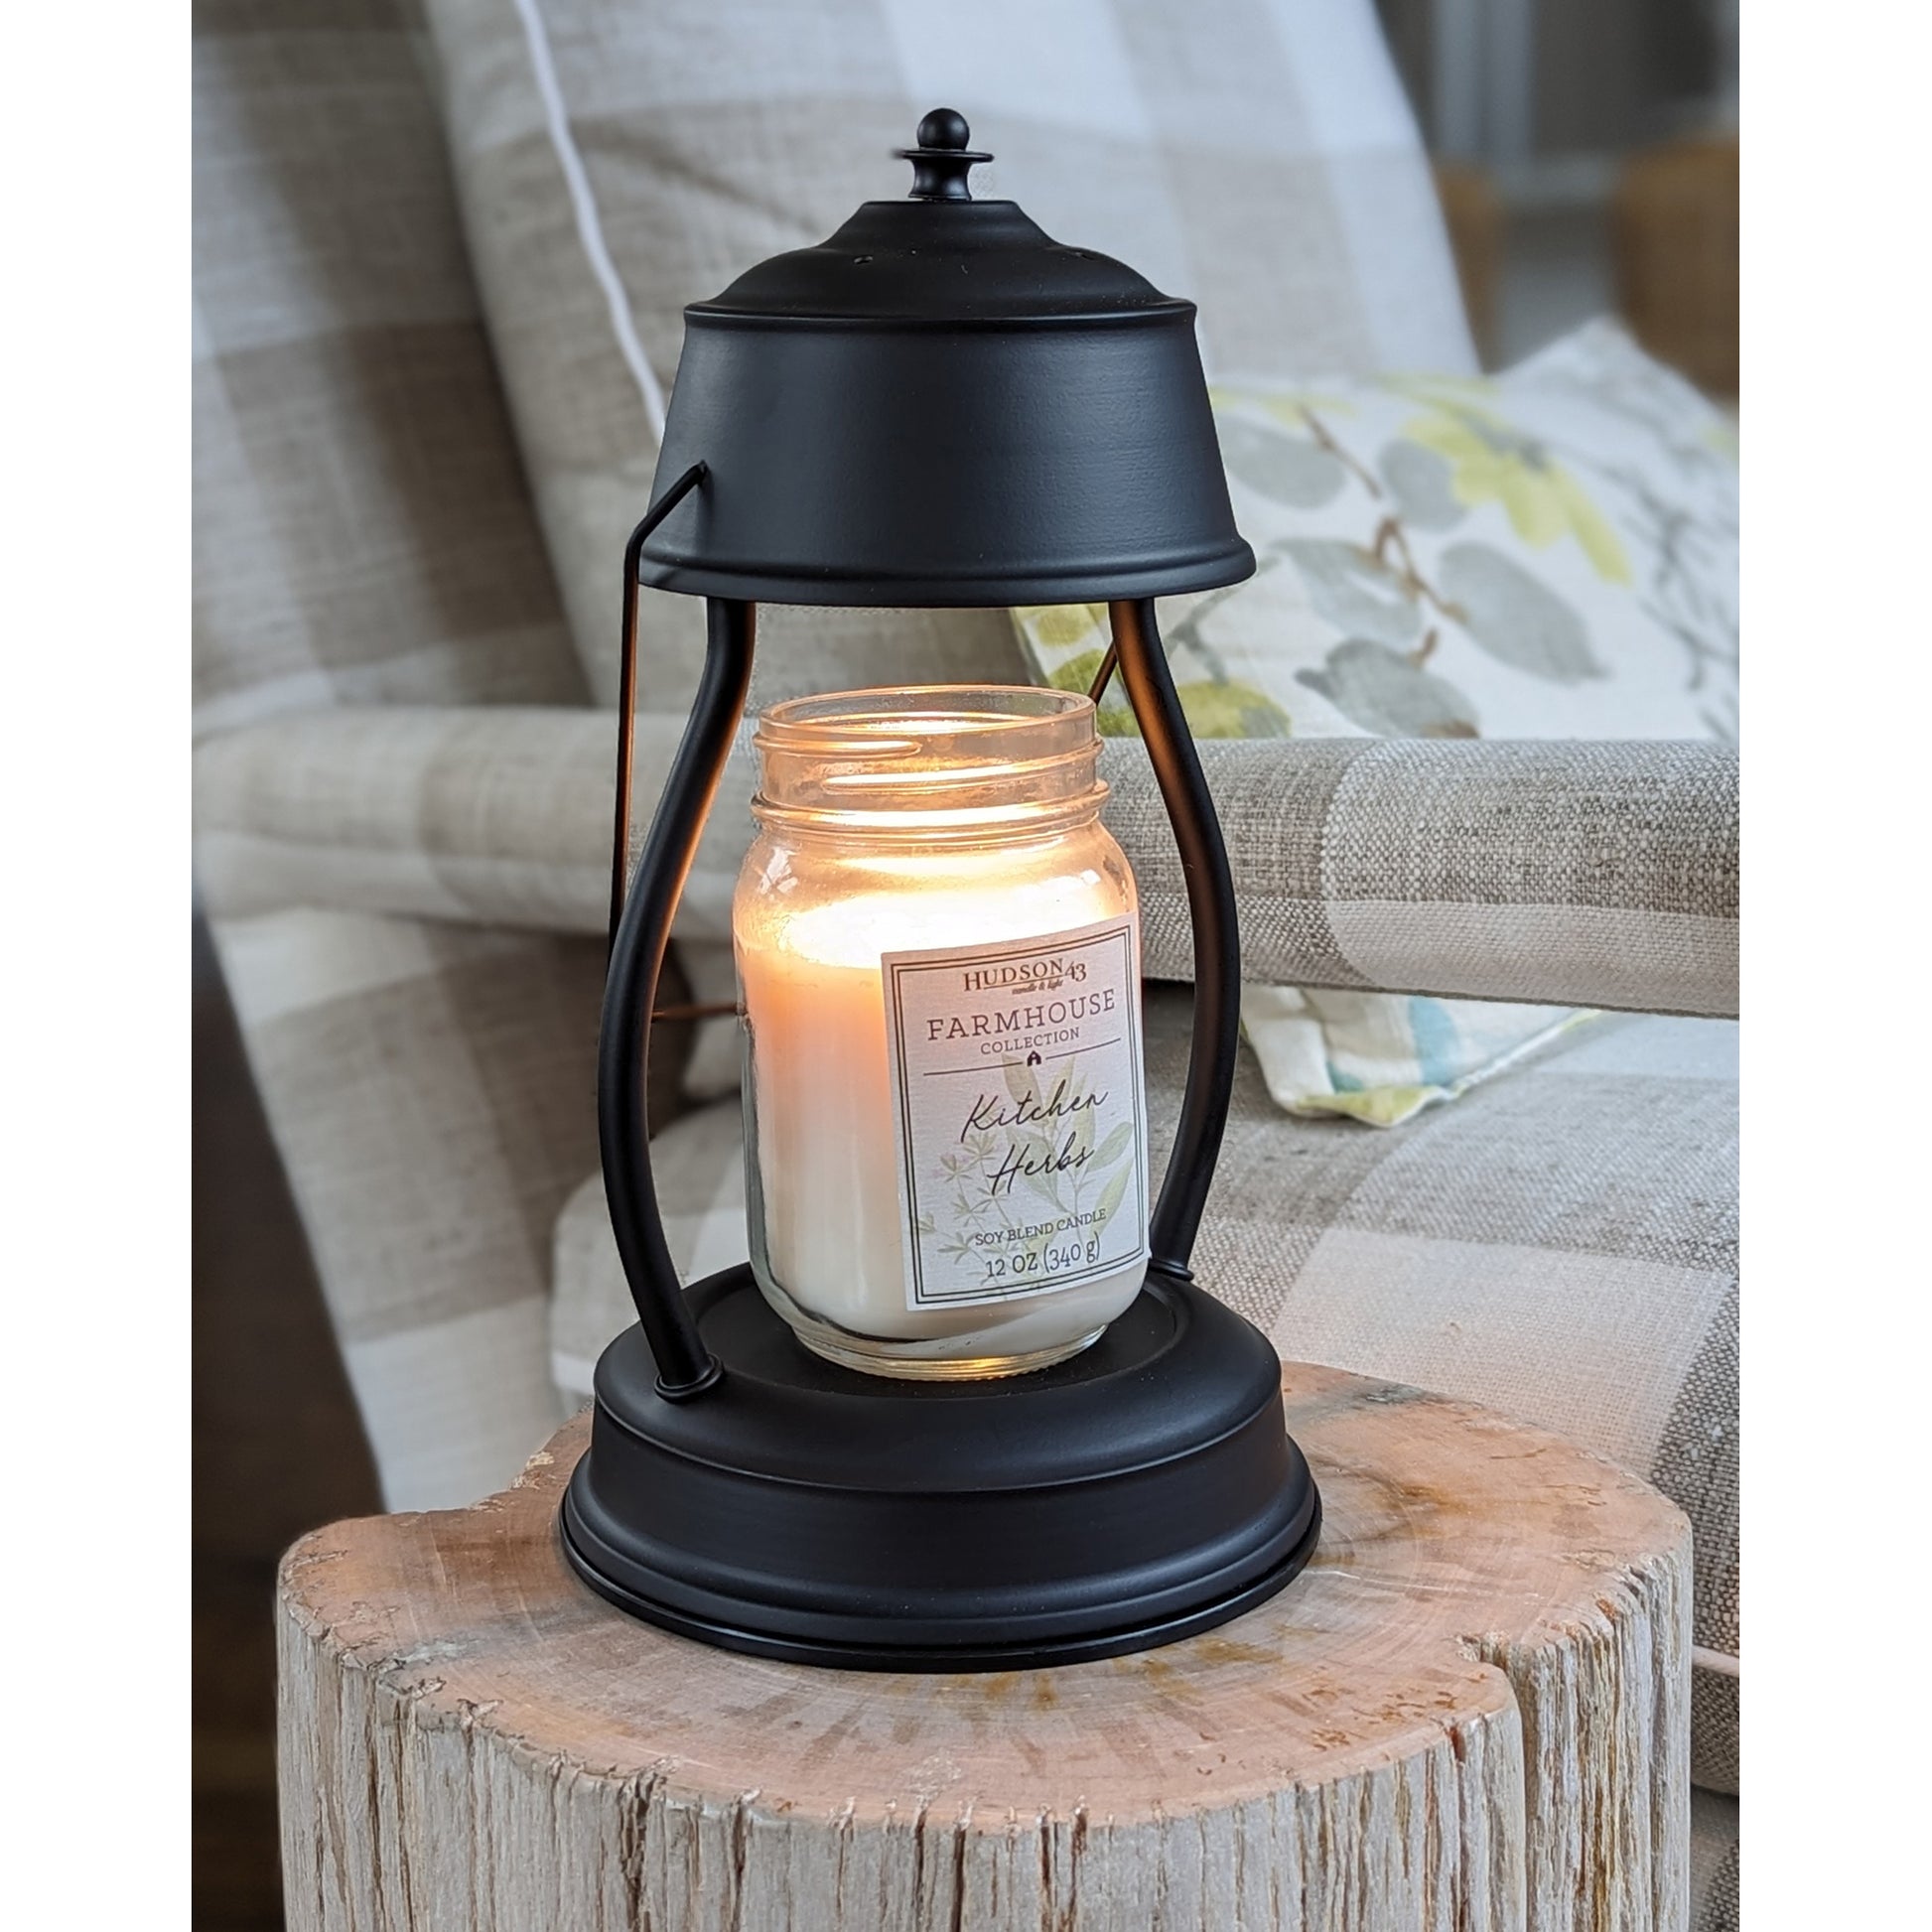 Image, lit black candle warmer with large mason jar scented candle sitting on a stone petrified log.